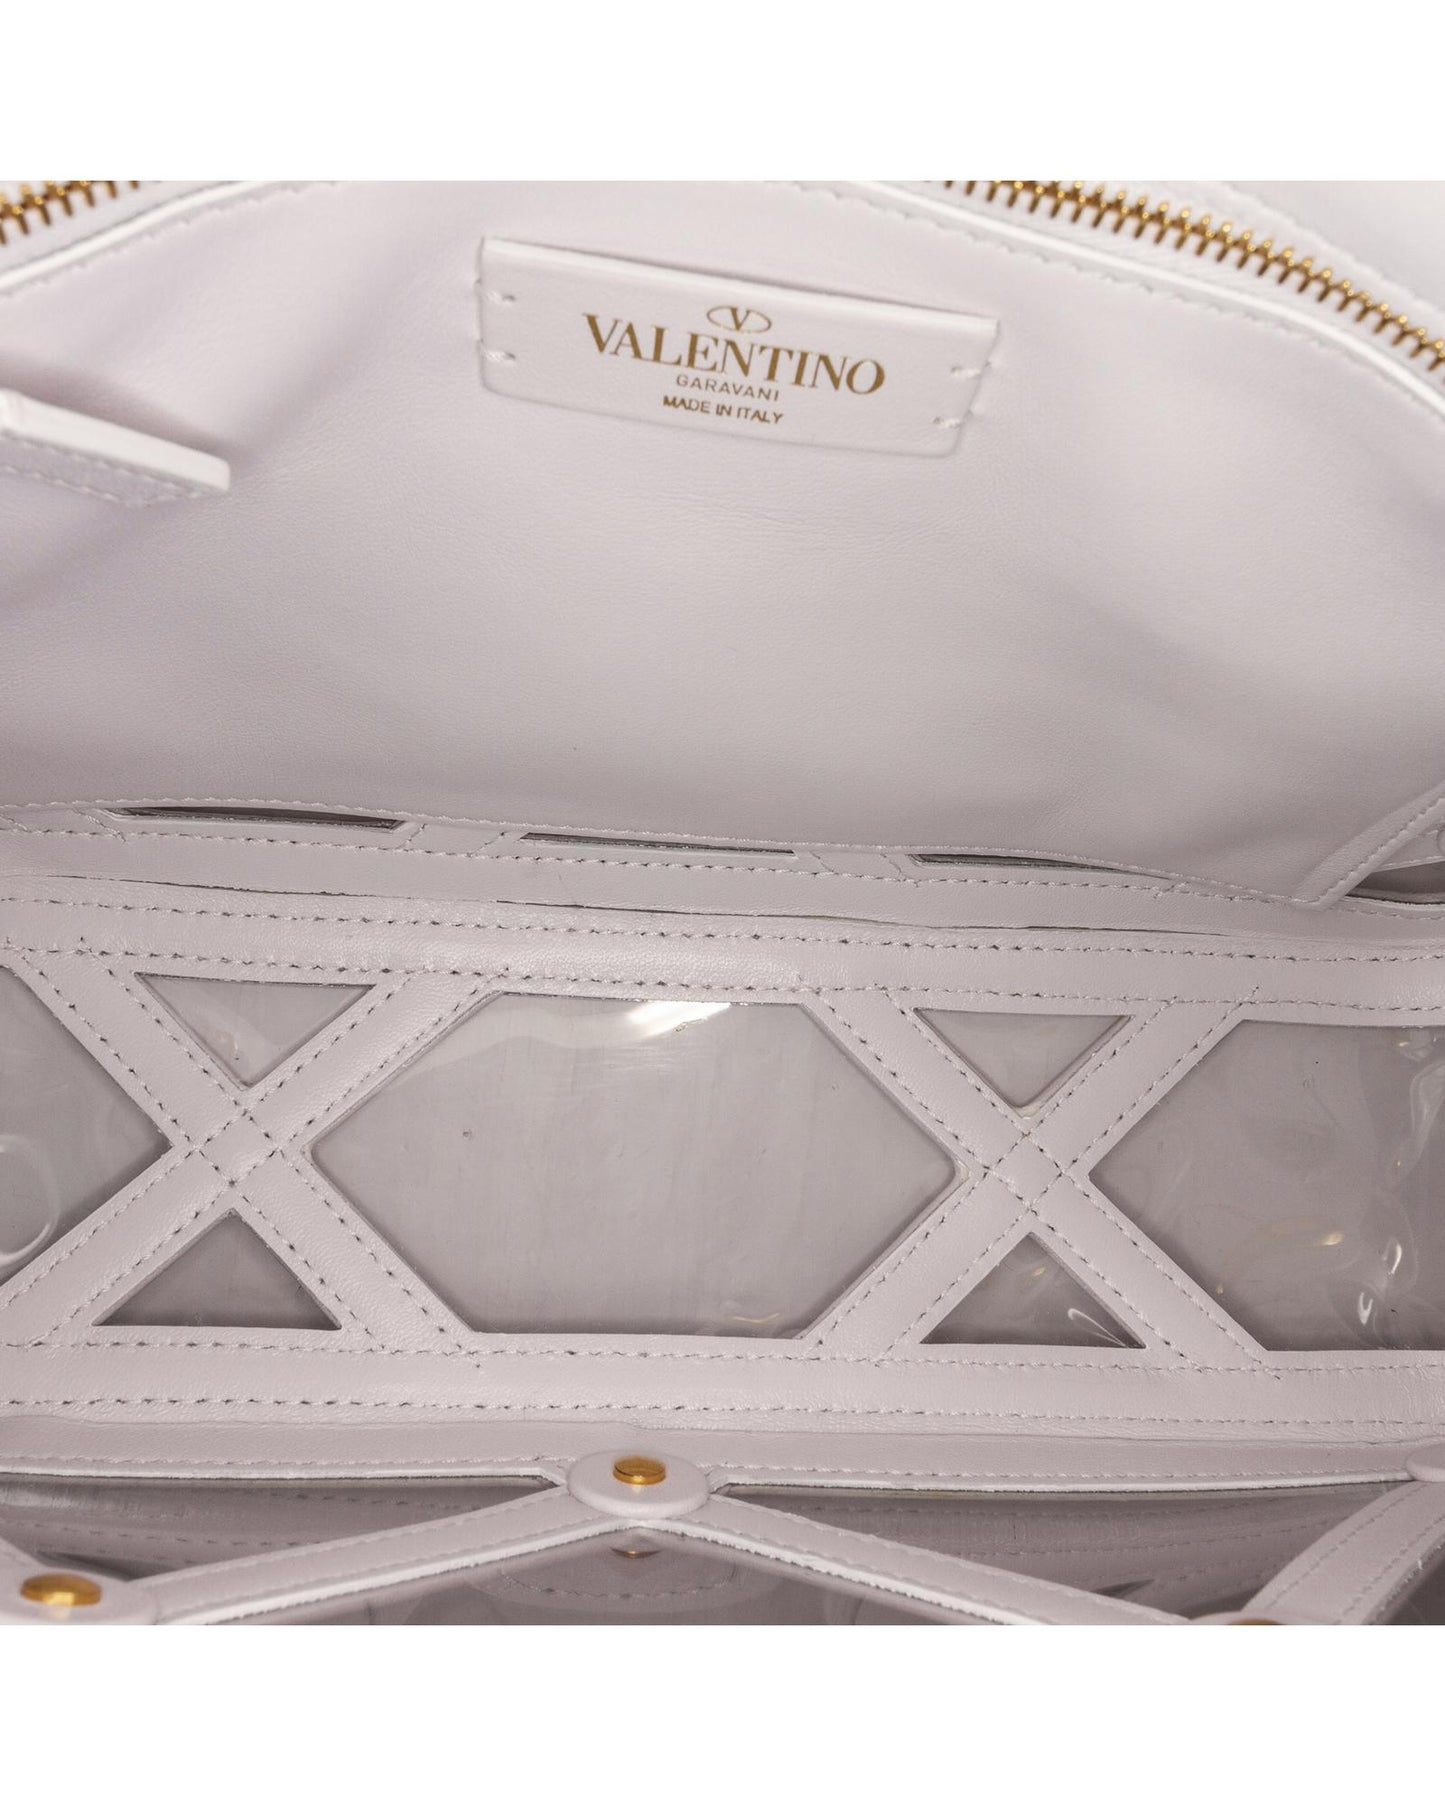 Valentino Women's Studded PVC Flap Bag in White